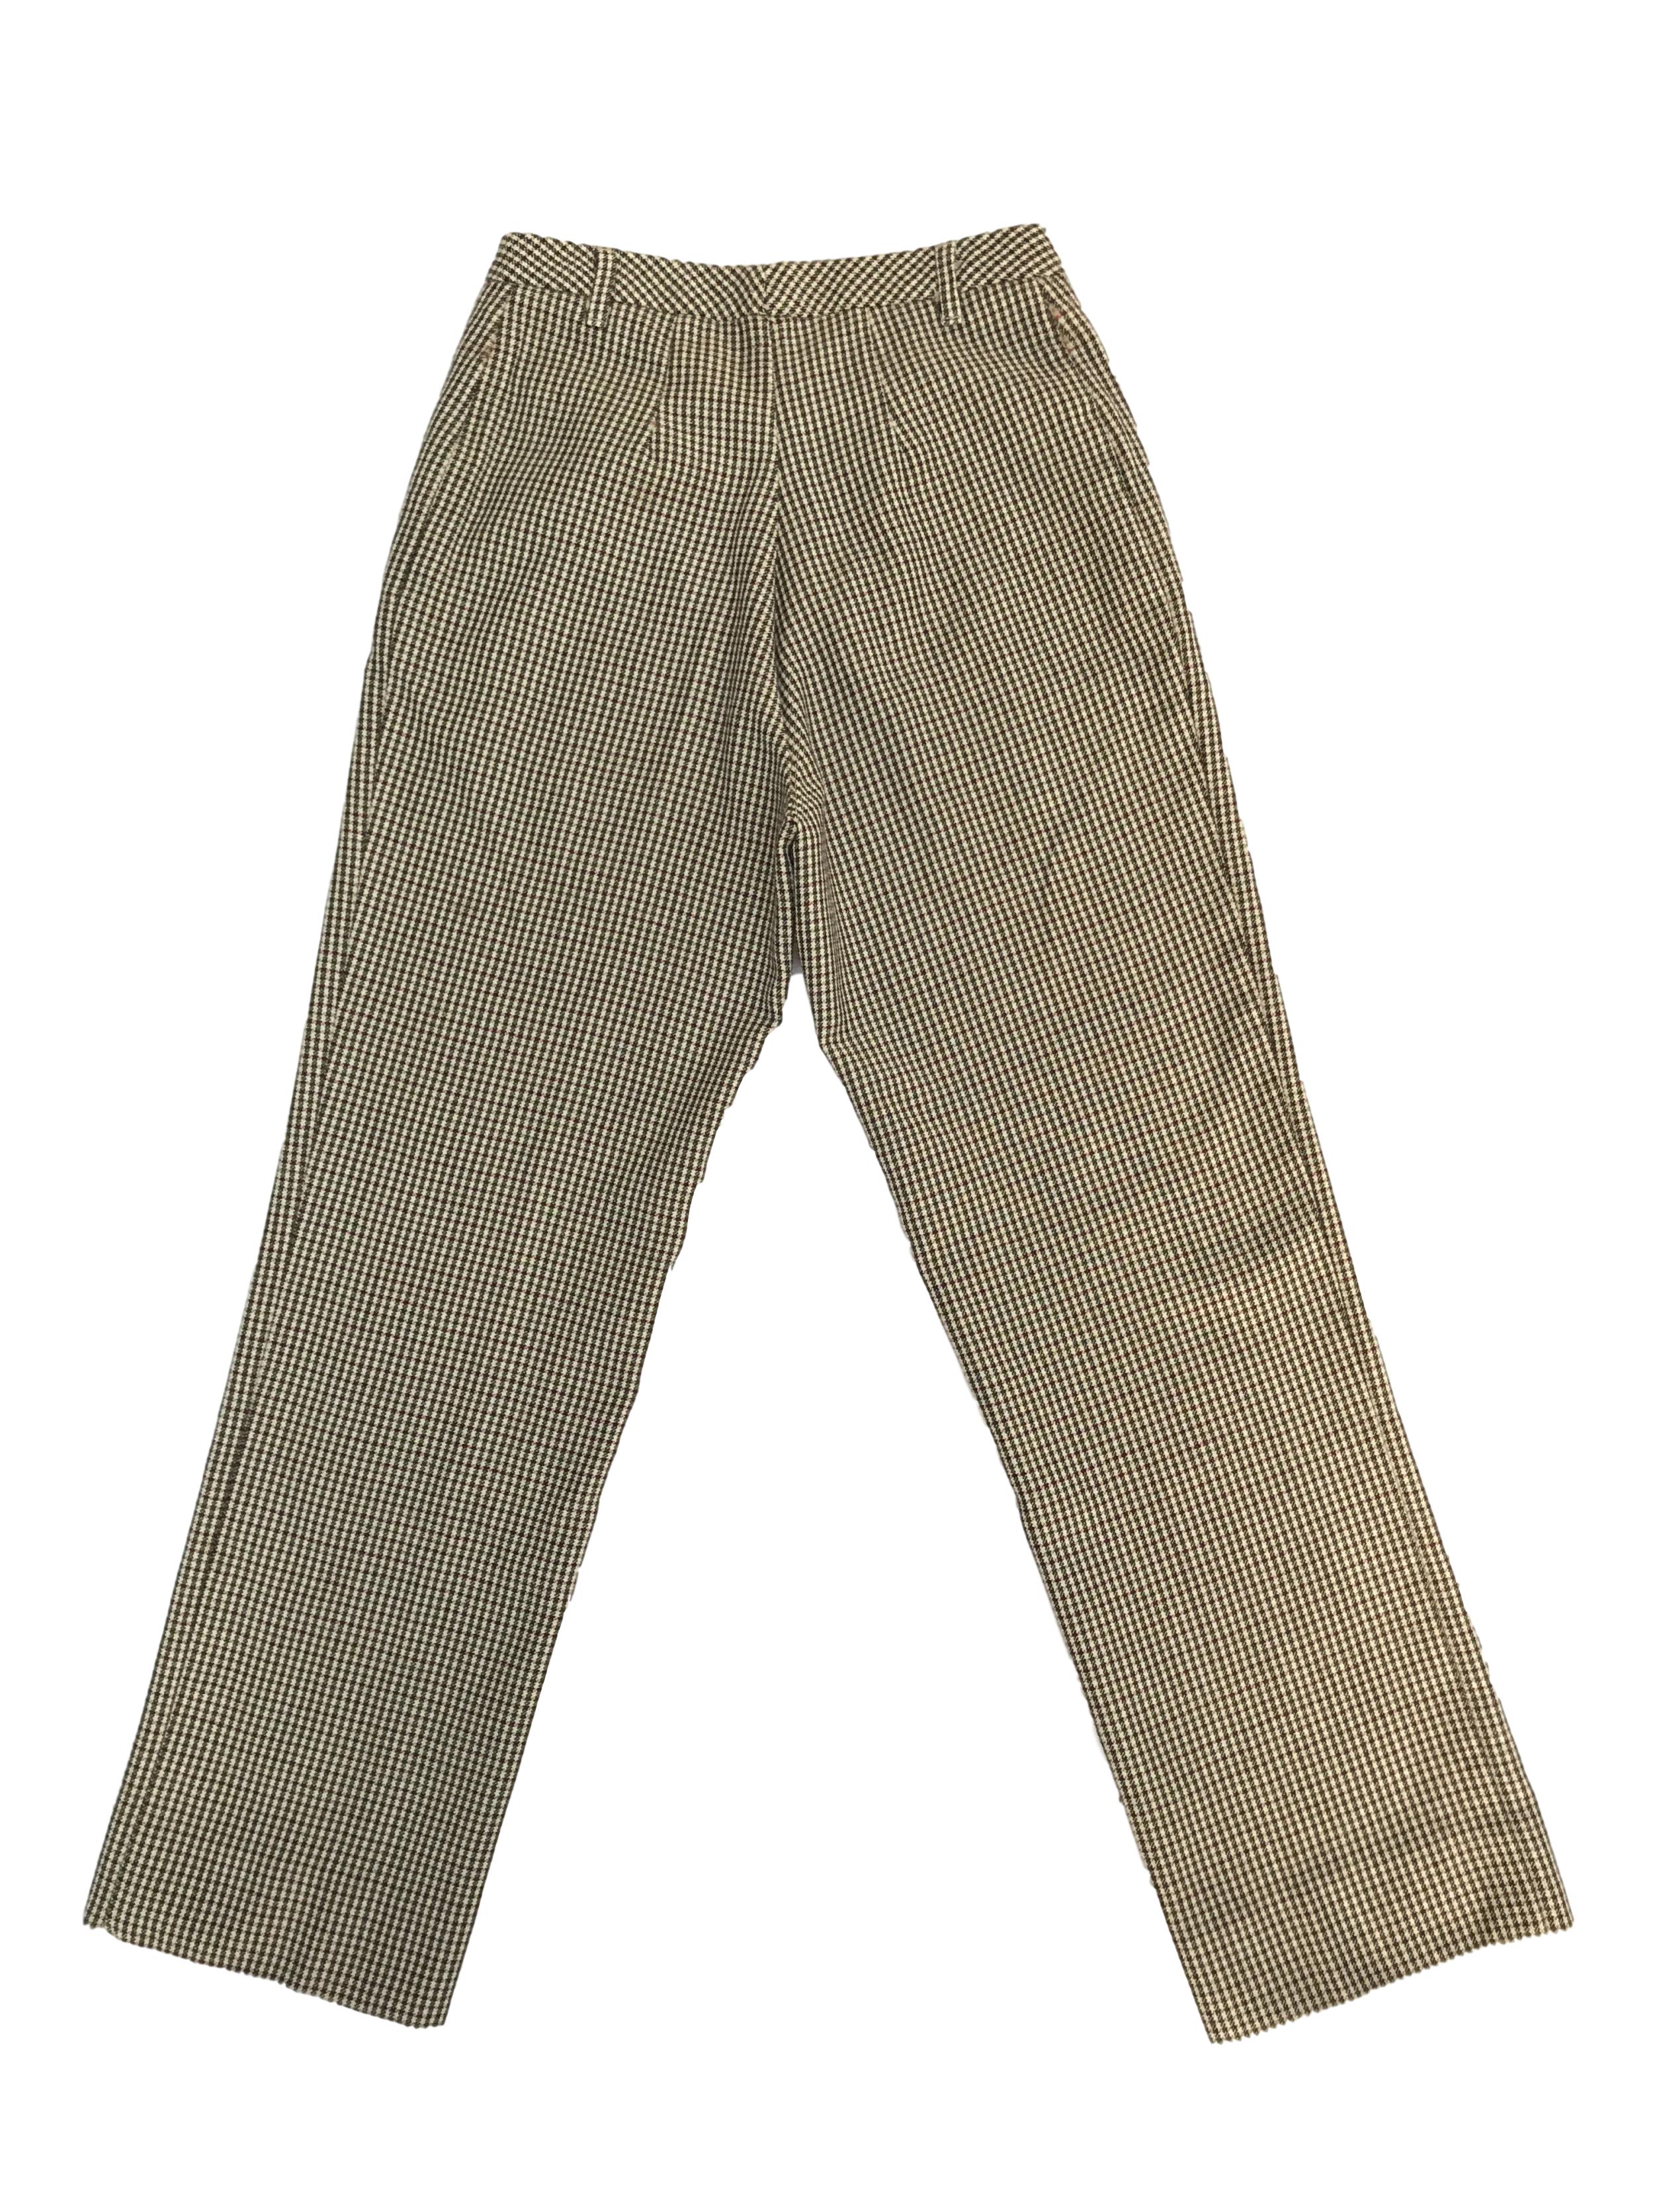 Pantalón Benetton 100% lana a cuadritos amarillos, fucsia y negros, corte recto, bolsillos laterales. ¡Lindo! Precio original S/ 300